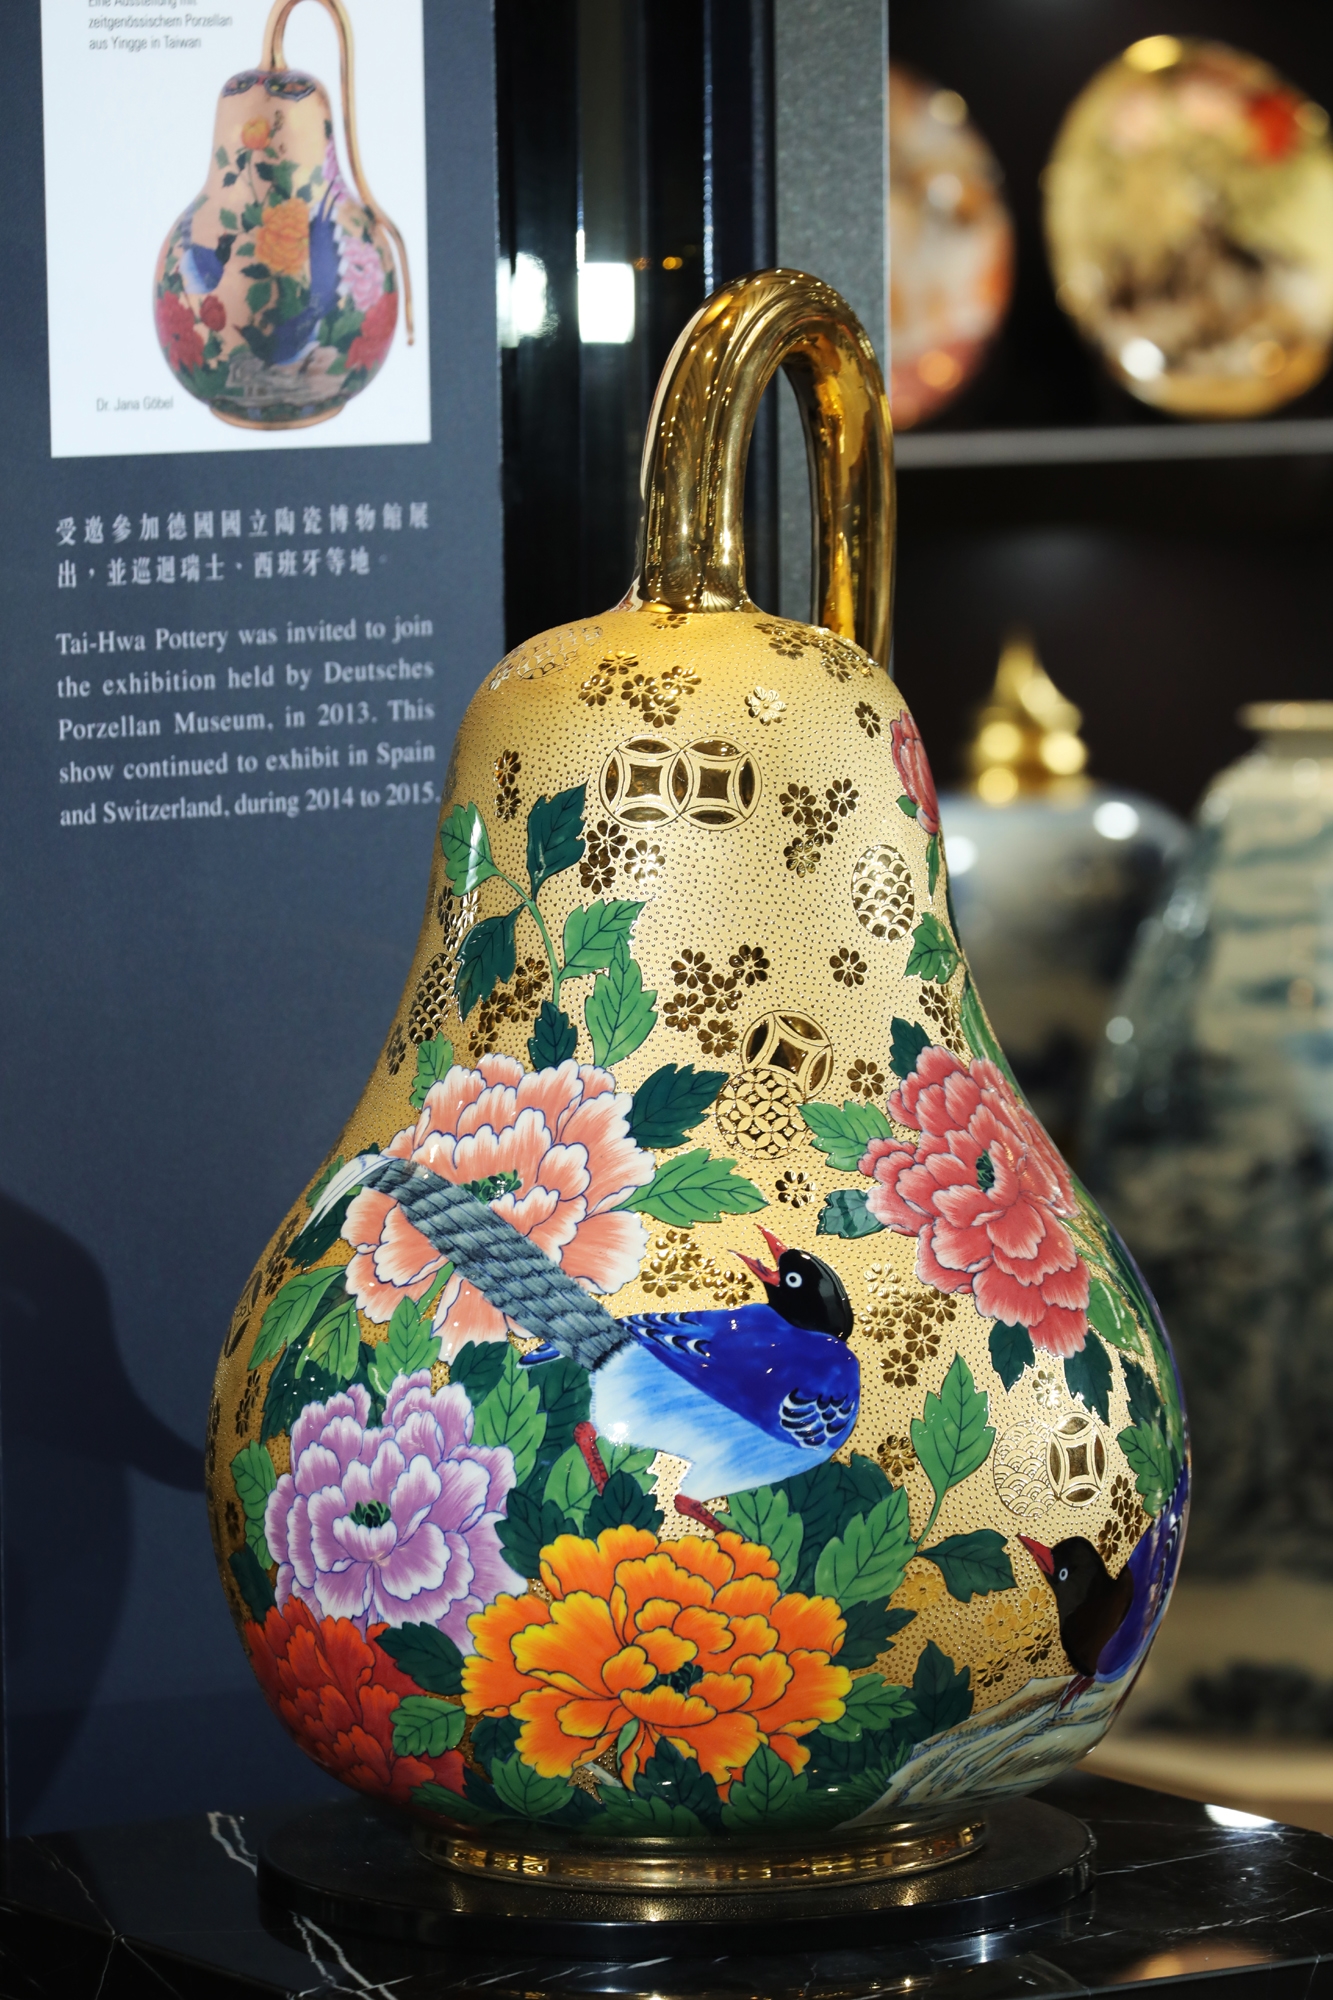 Tai臺華窯 台崋窯 Tai-Hwa Pottery 花瓶 壺 - 花瓶・フラワースタンド